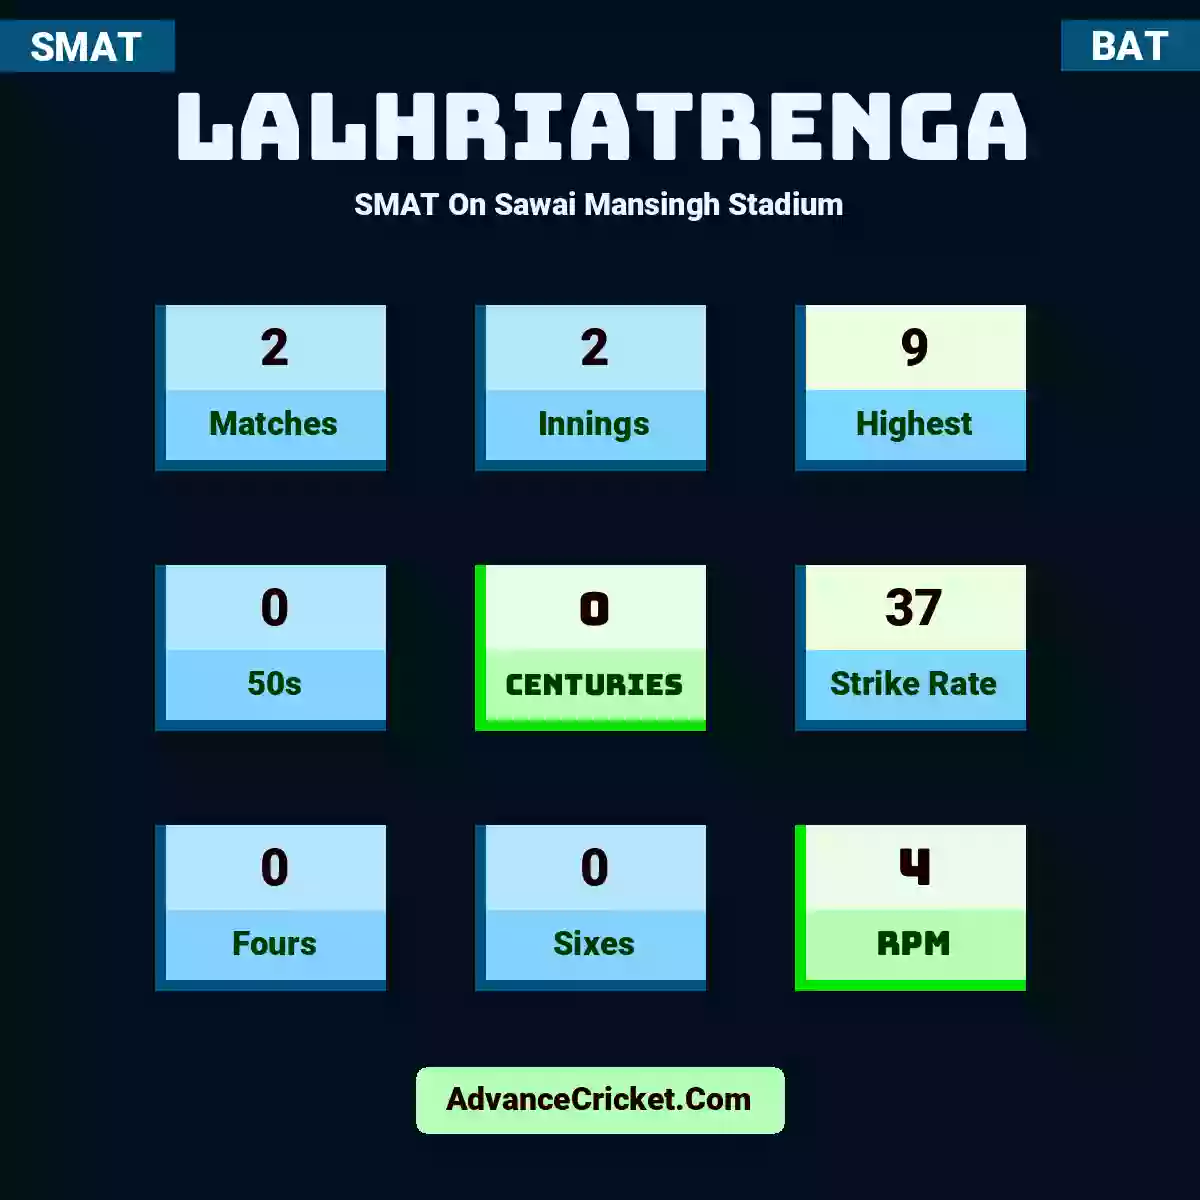 Lalhriatrenga SMAT  On Sawai Mansingh Stadium, Lalhriatrenga played 2 matches, scored 9 runs as highest, 0 half-centuries, and 0 centuries, with a strike rate of 37. Lalhriatrenga hit 0 fours and 0 sixes, with an RPM of 4.